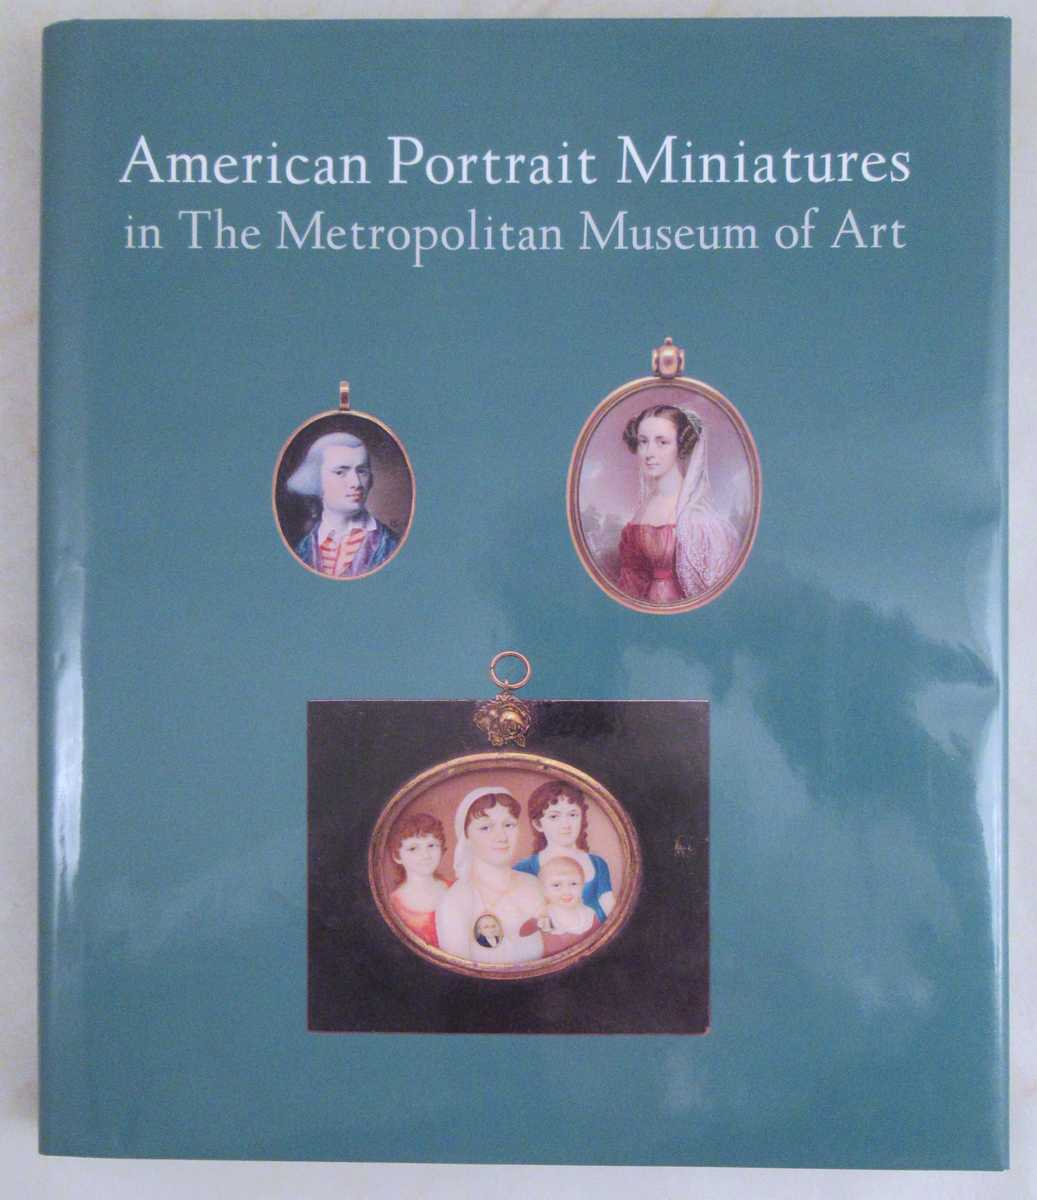 Barratt, Carrie Rebora; Zabar, Lori - American Portrait Miniatures in The Metropolitan Museum of Art